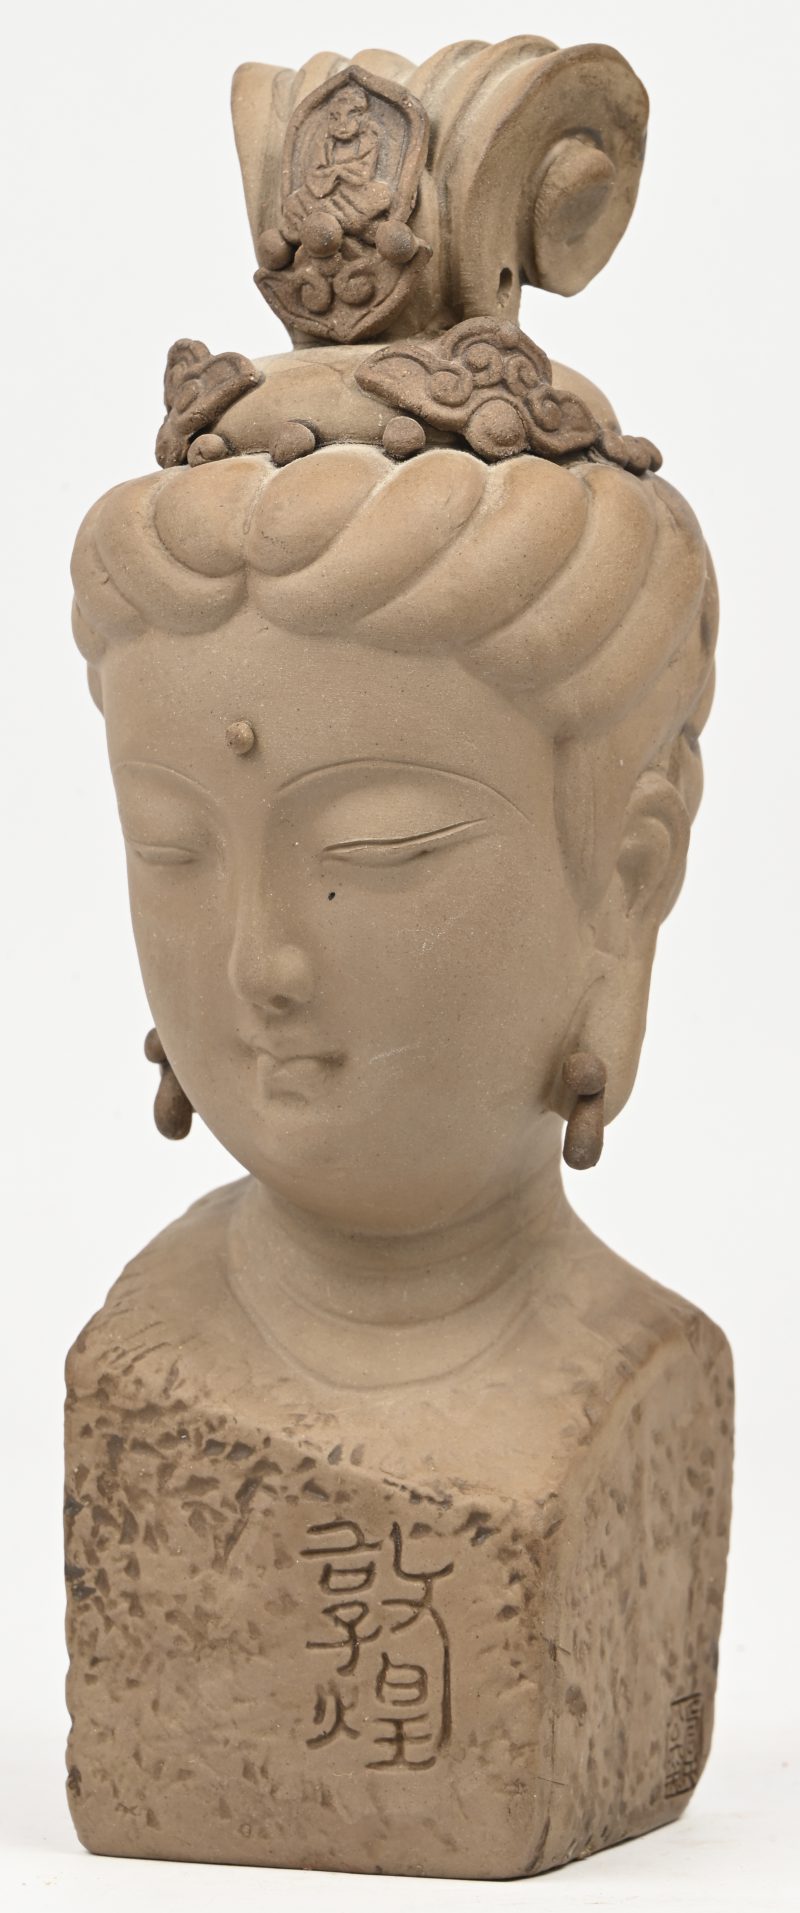 Een terracotta Boeddha buste in doosje met gestoffeerd oppervlak.